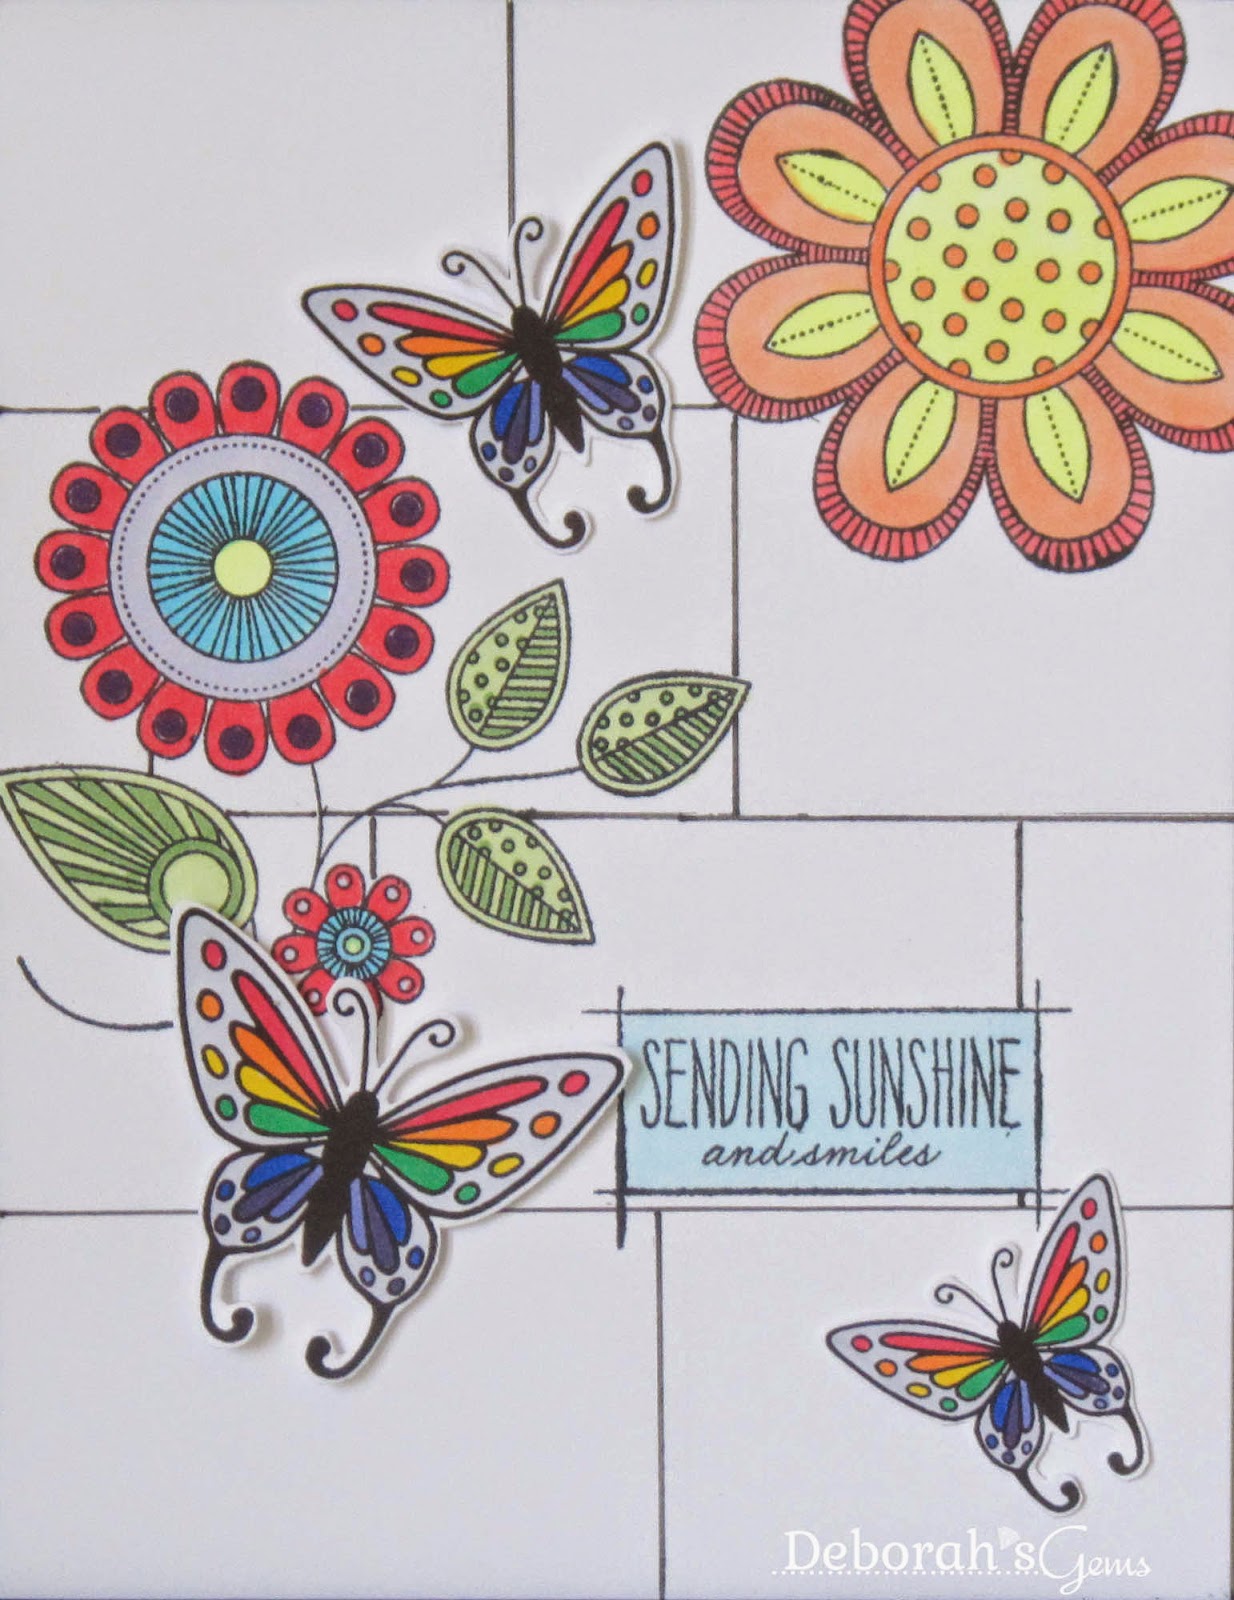 Sending Sunshine - photo by Deborah Frings - Deborah's Gems